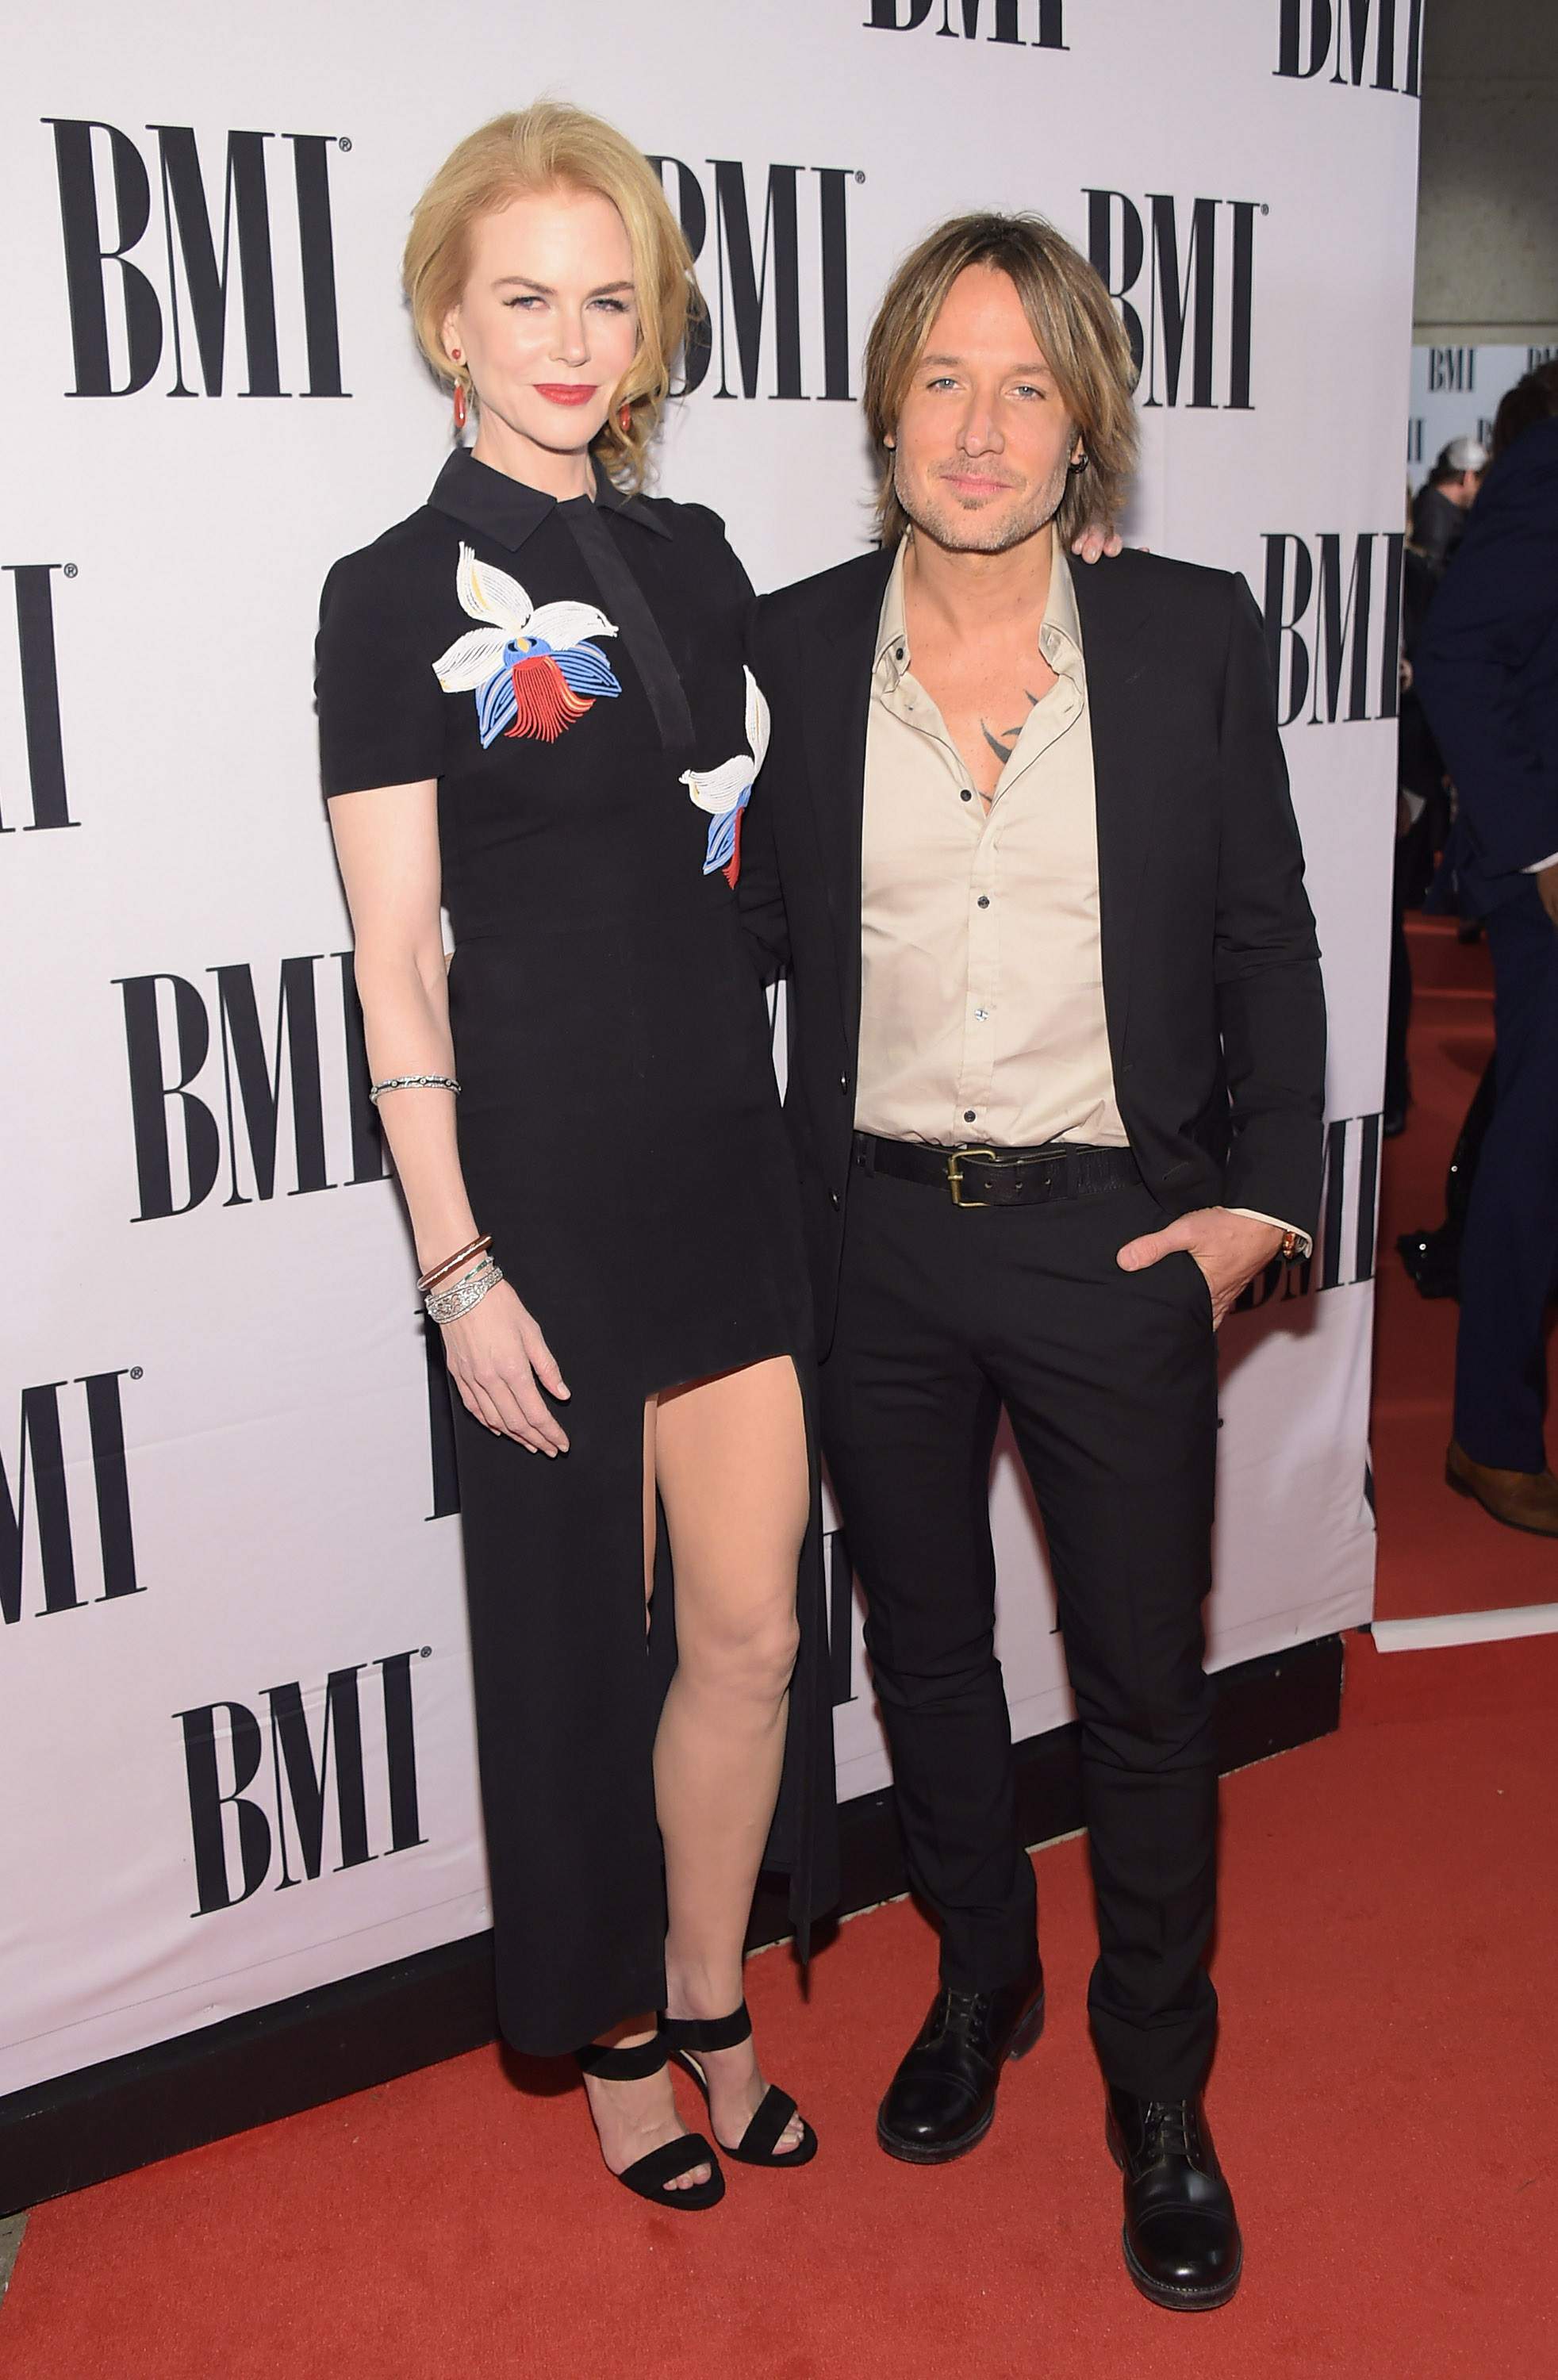 Nicole Kidman - 62nd Annual BMI Country Awards in Nashville - November 4, 2014 007.jpg